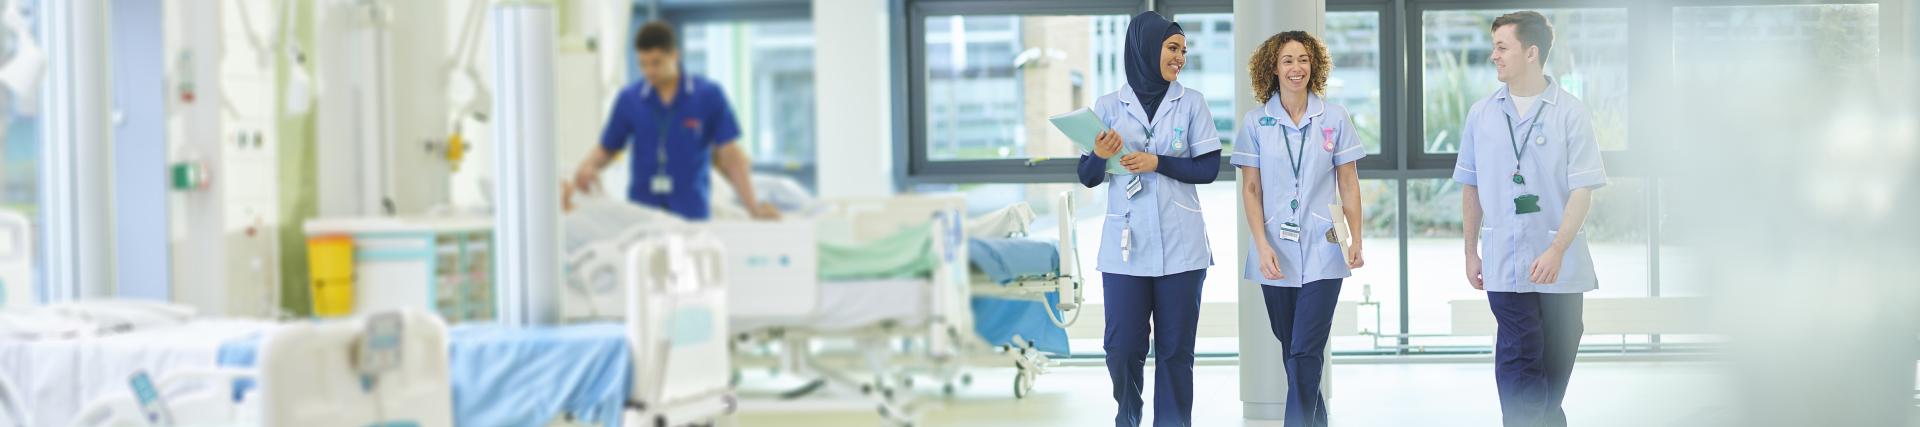 Student nurses walks through a hospital ward